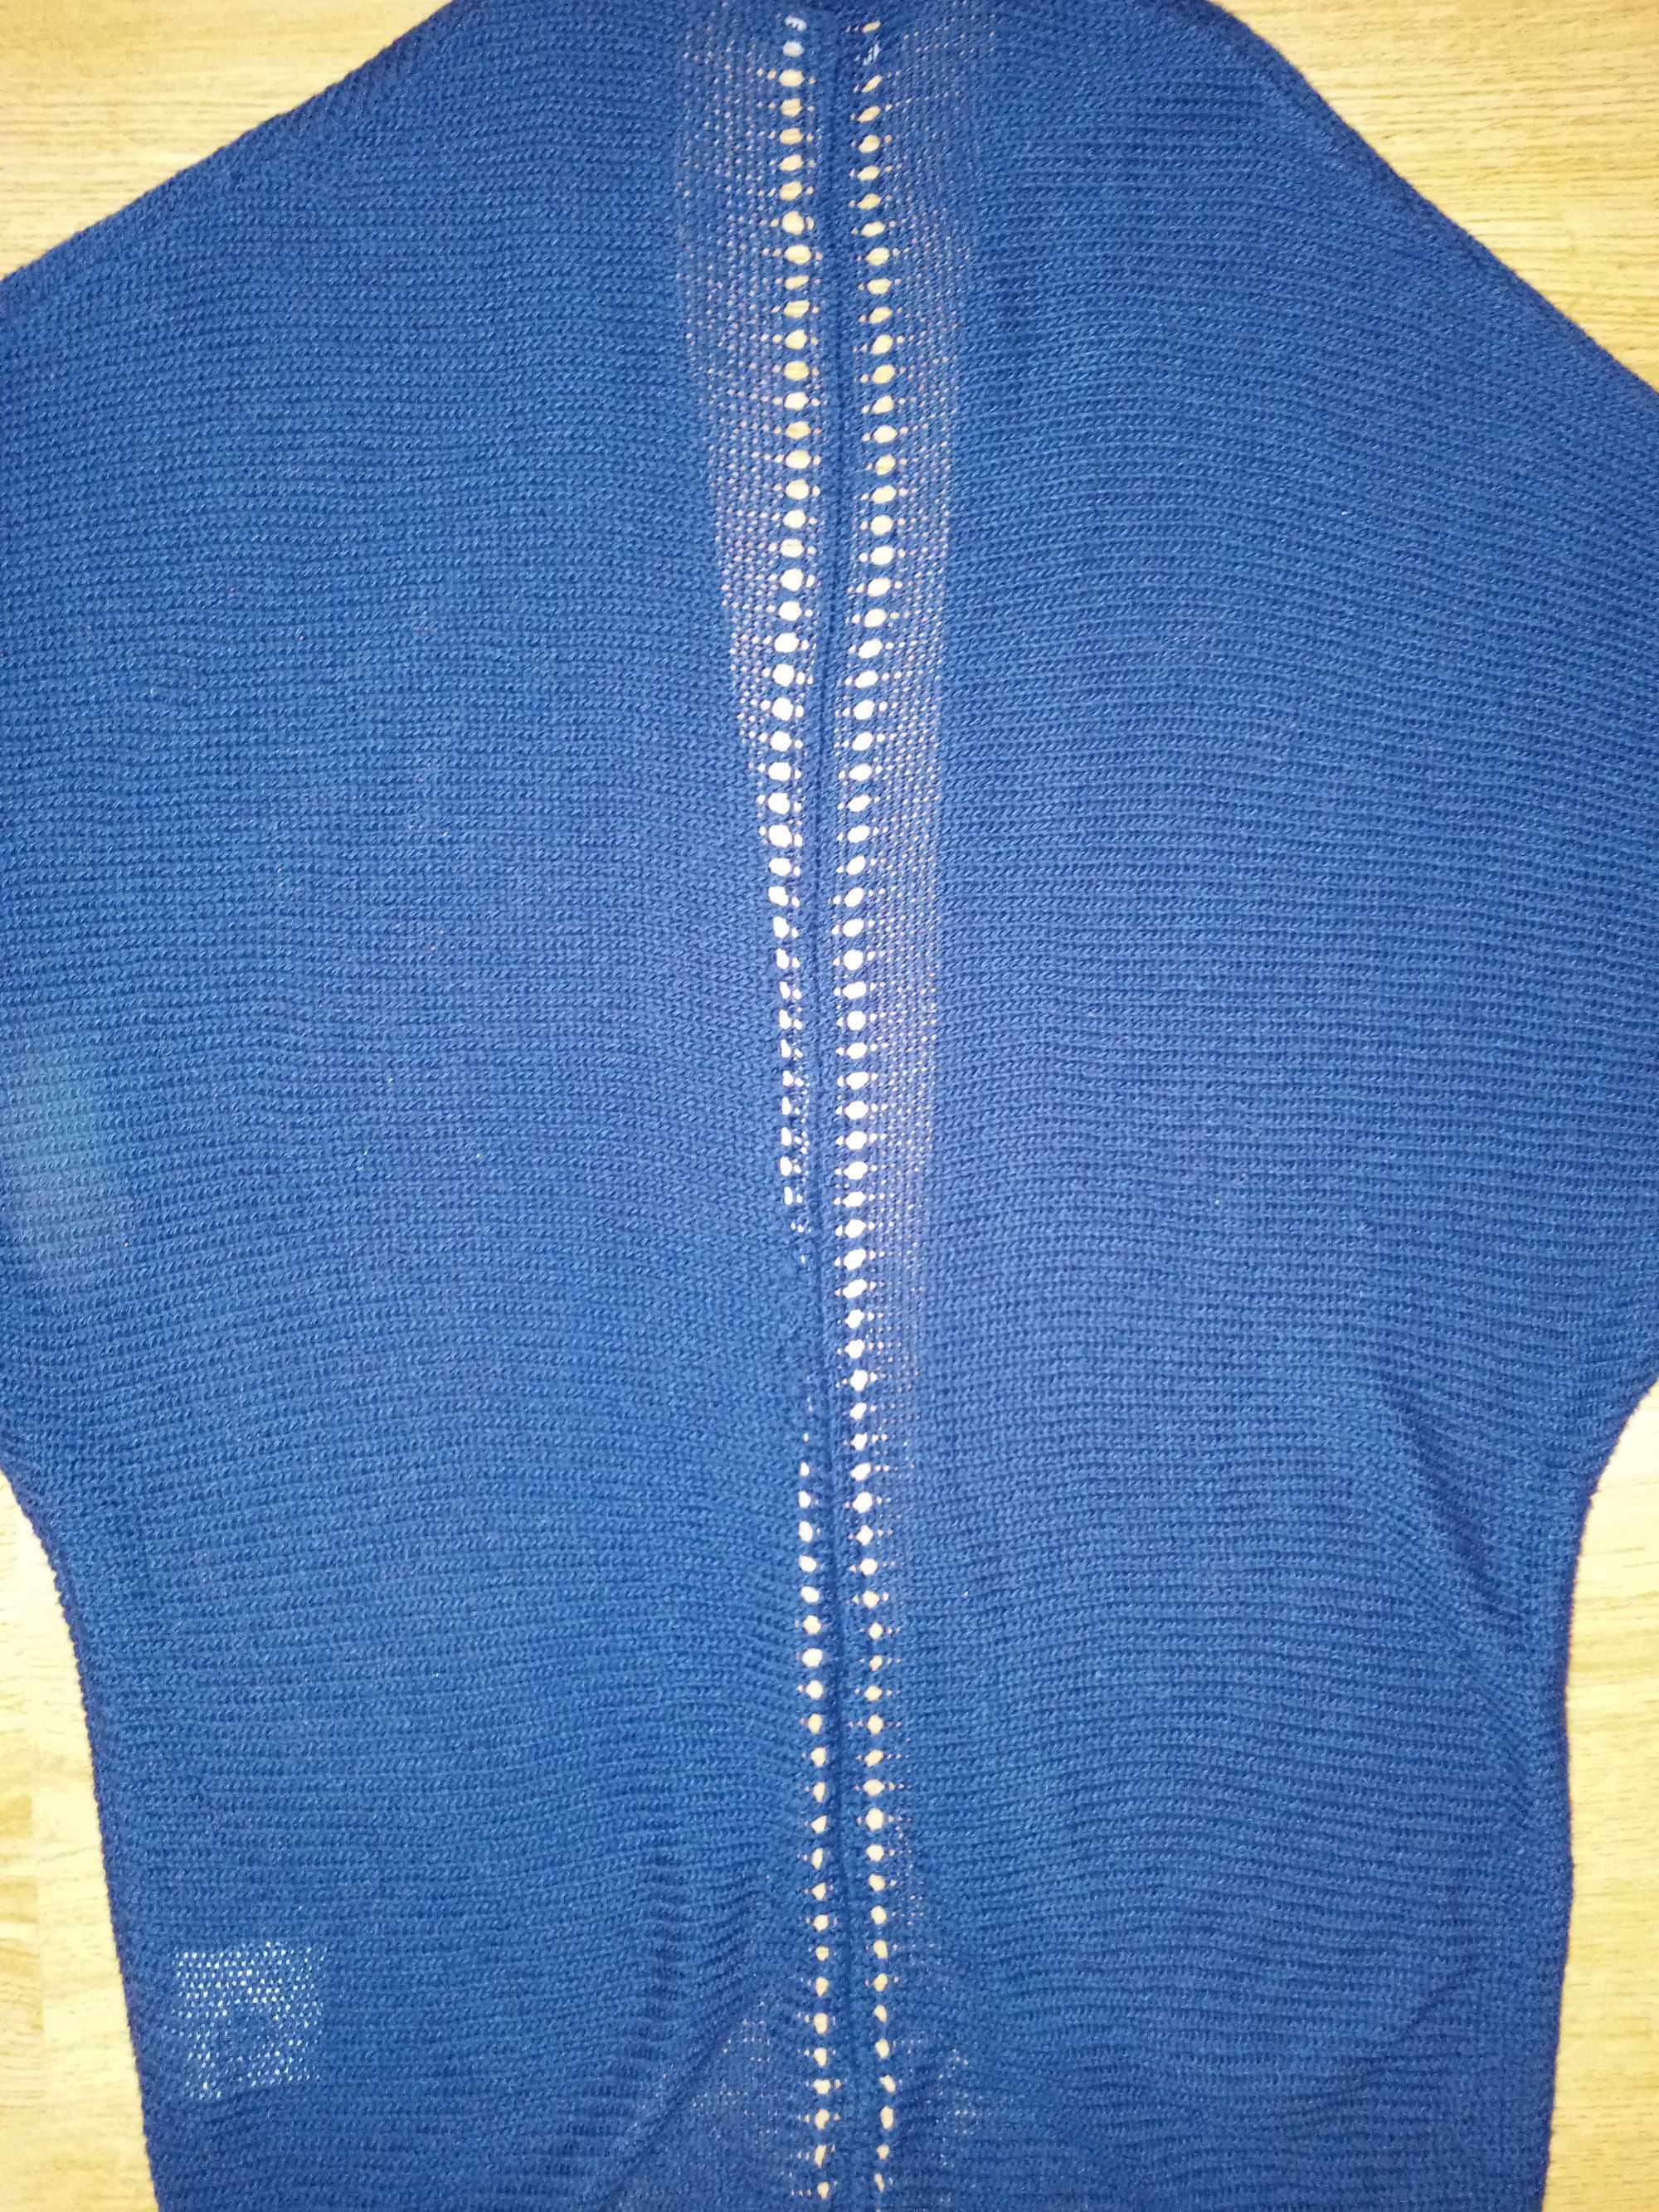 Narzutka sweter blue seven ala nietoperz r38 granatowy